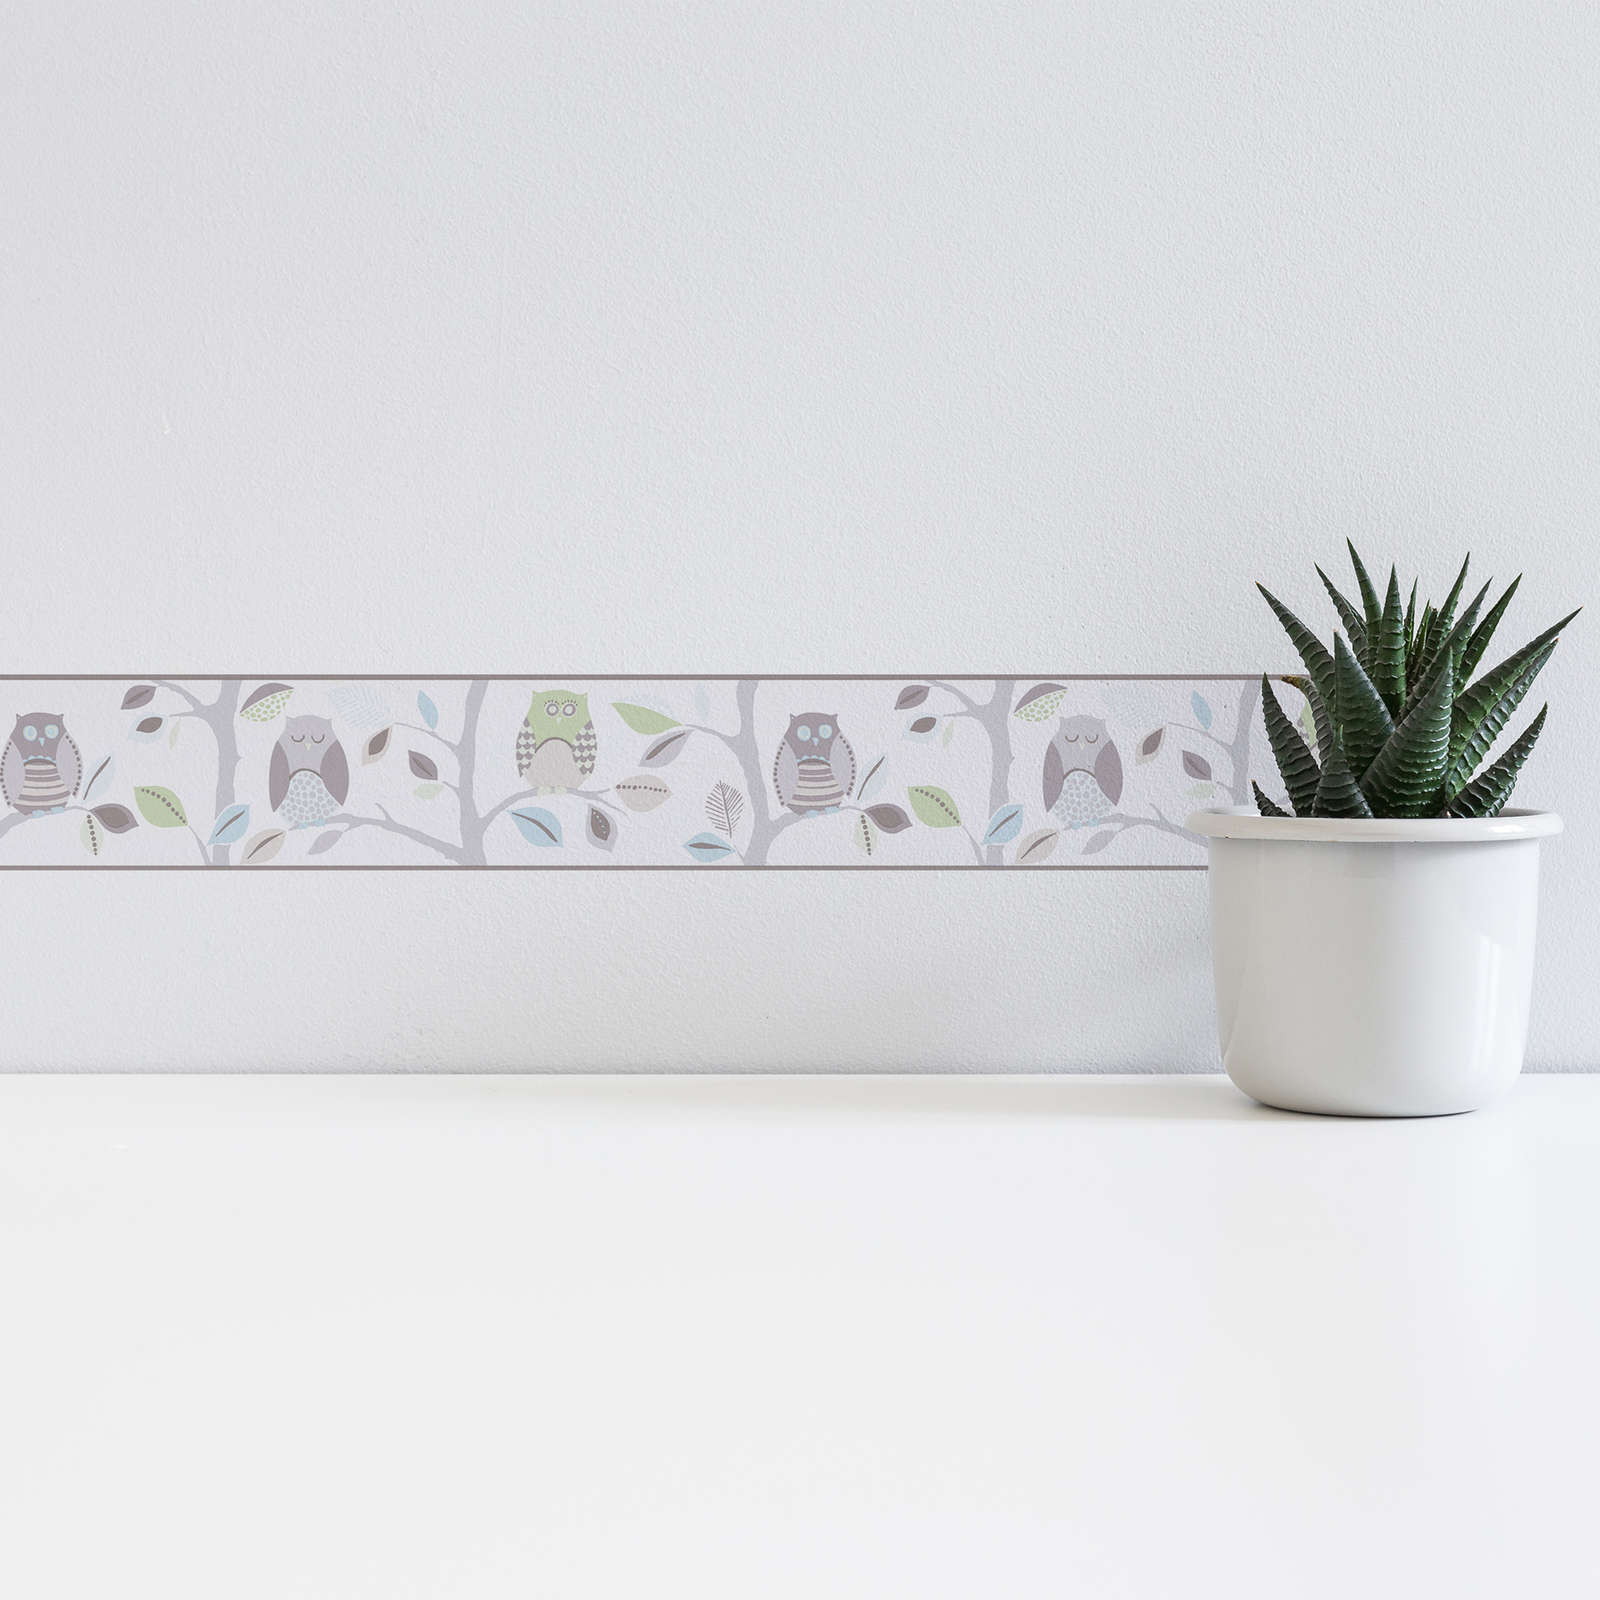             Owls wallpaper border for Nursery - beige, grey, green
        